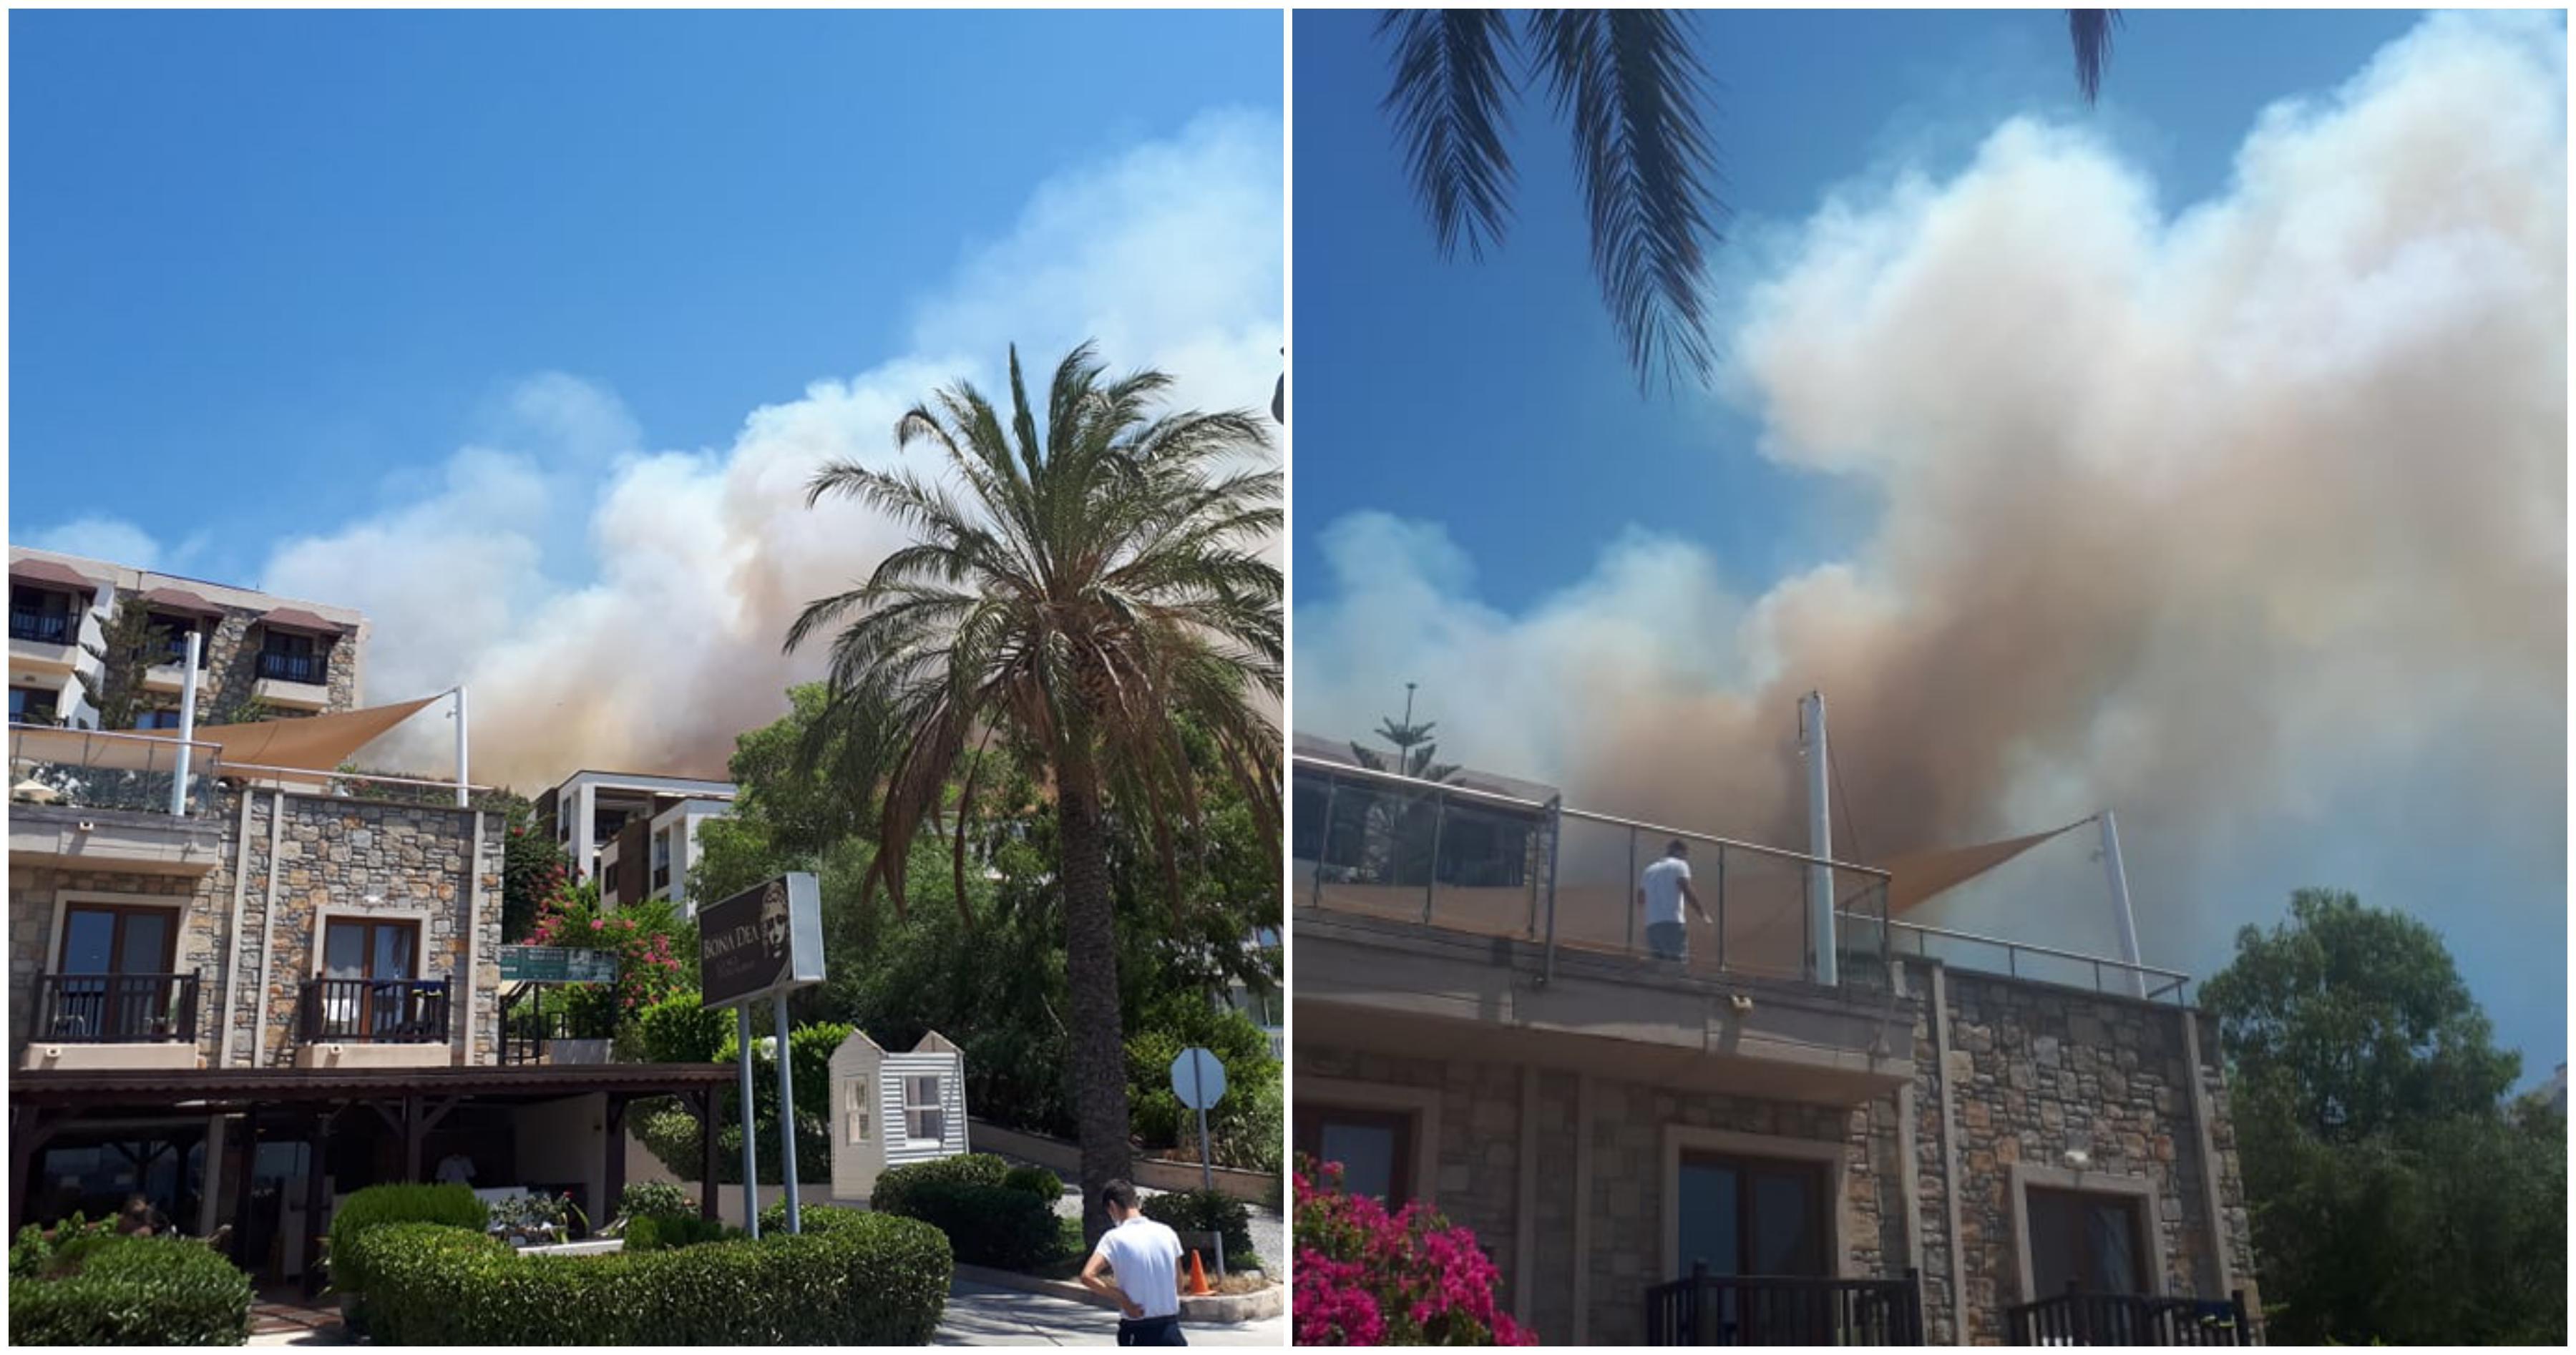 Požar buknuo iznad hotela gdje su smješteni bh. turisti - Avaz